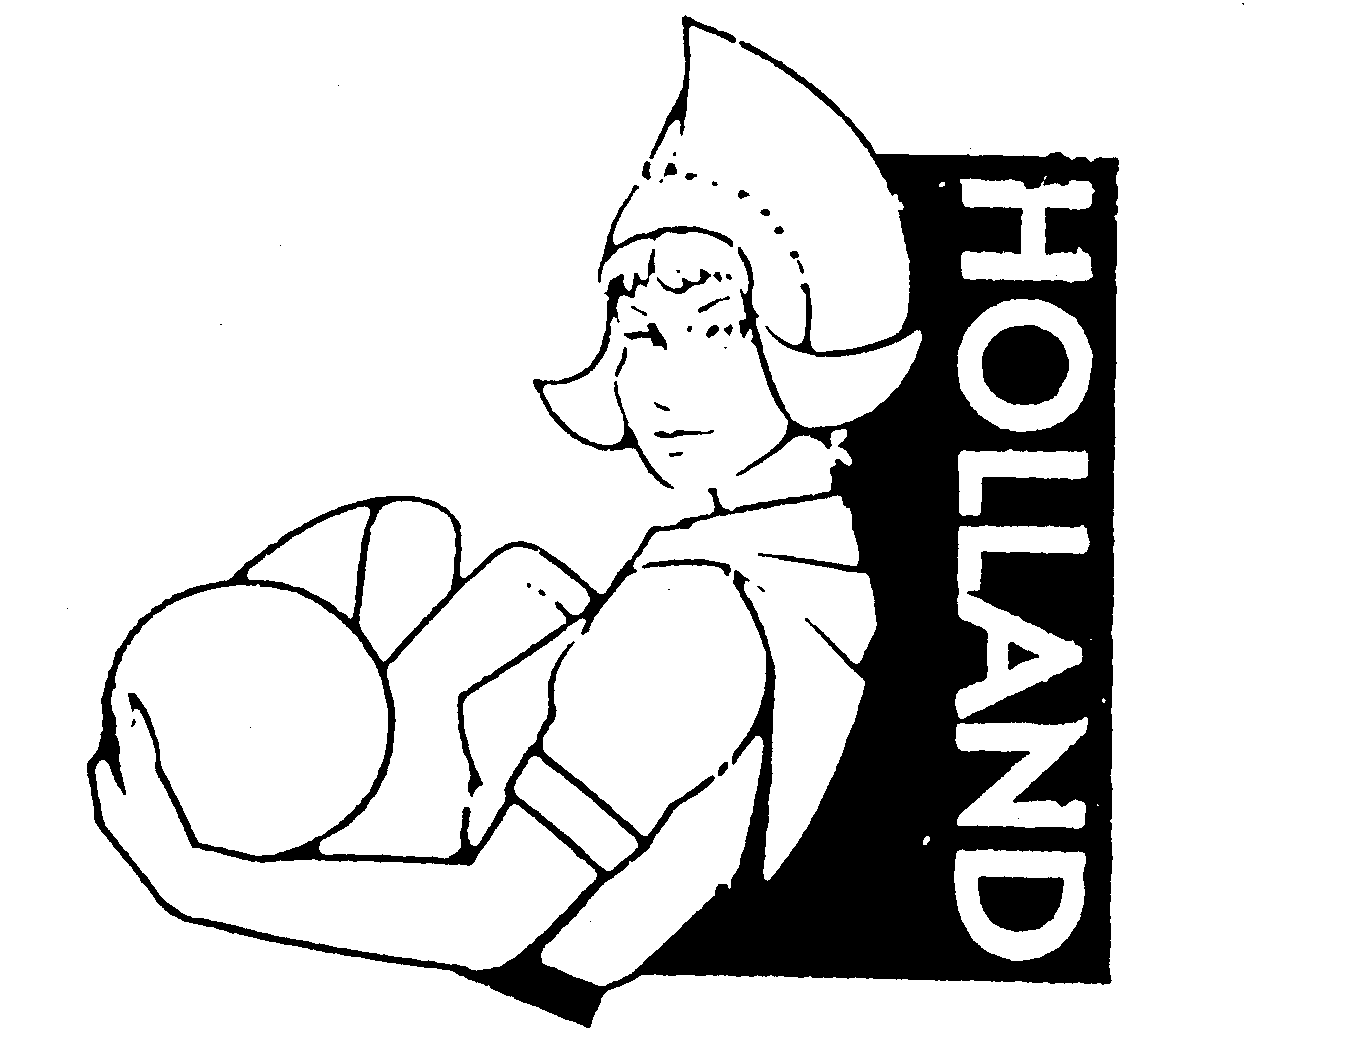 HOLLAND